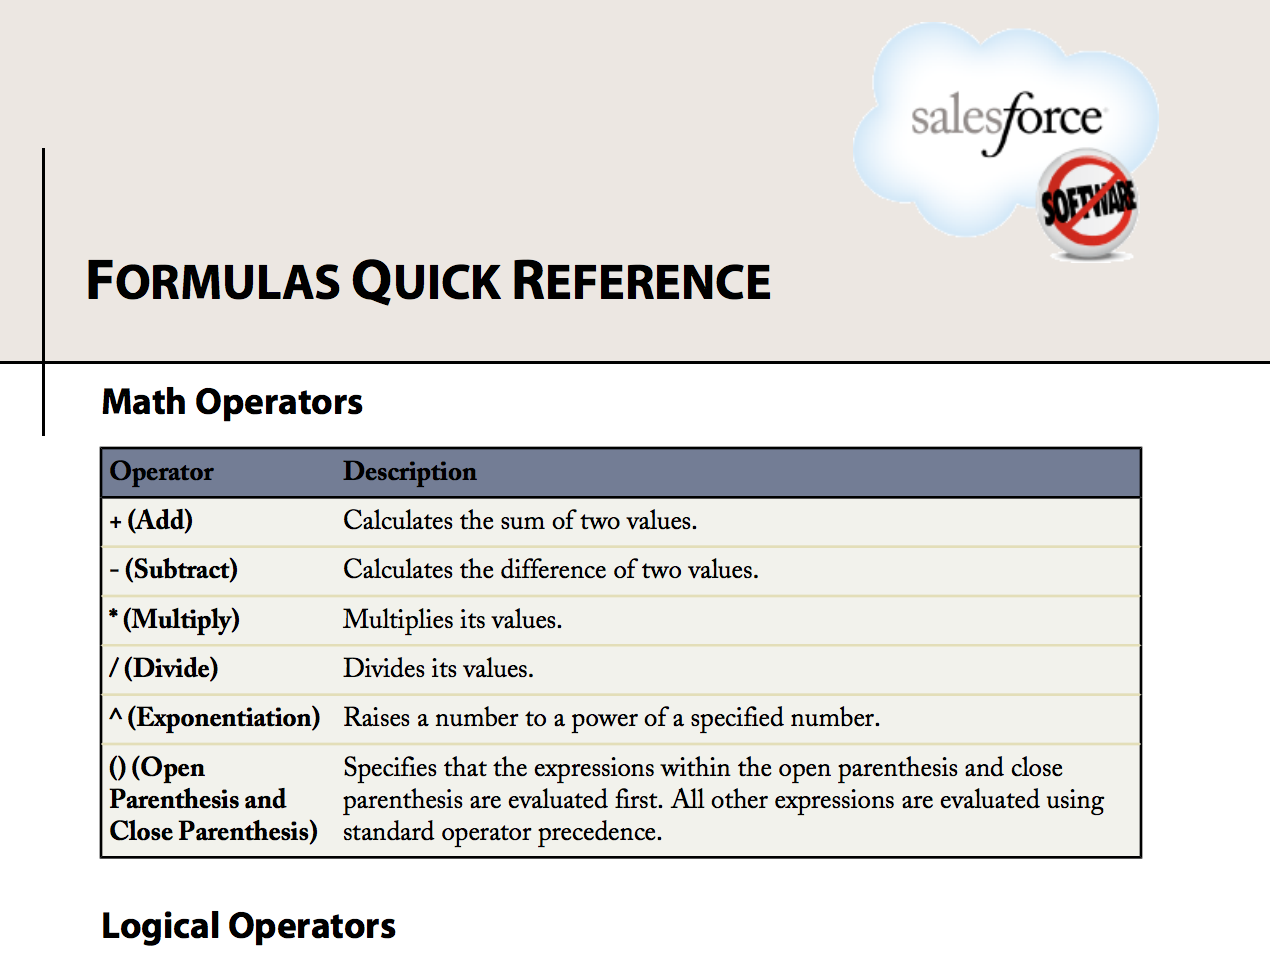 salesforce api documentation pdf